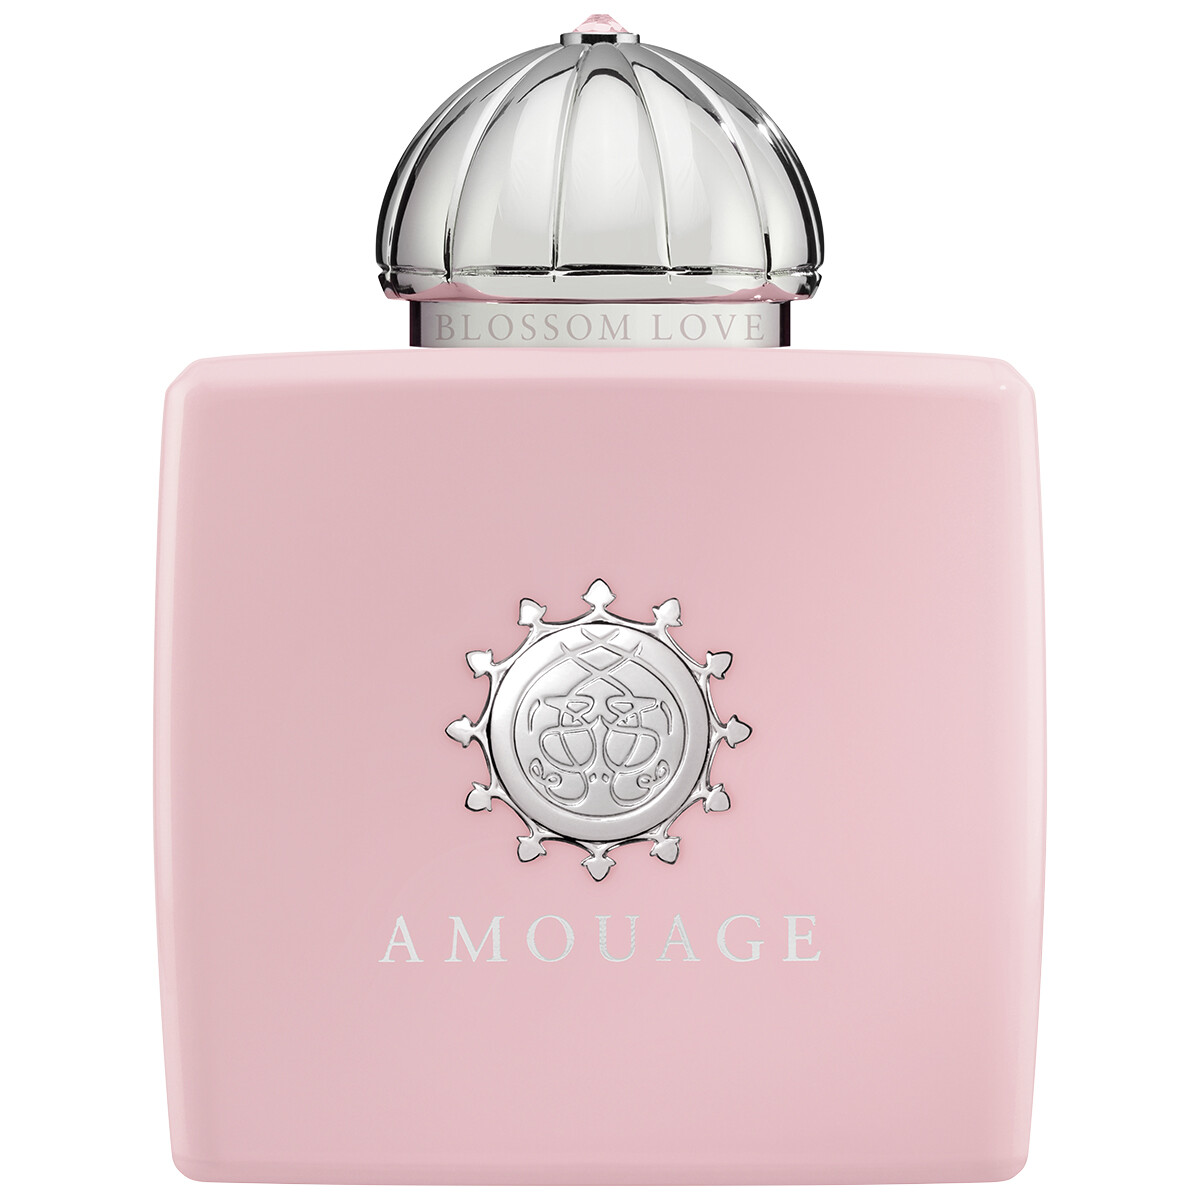 Luxus Parfum Amouage Blossom Love EDP 100ml kaufen